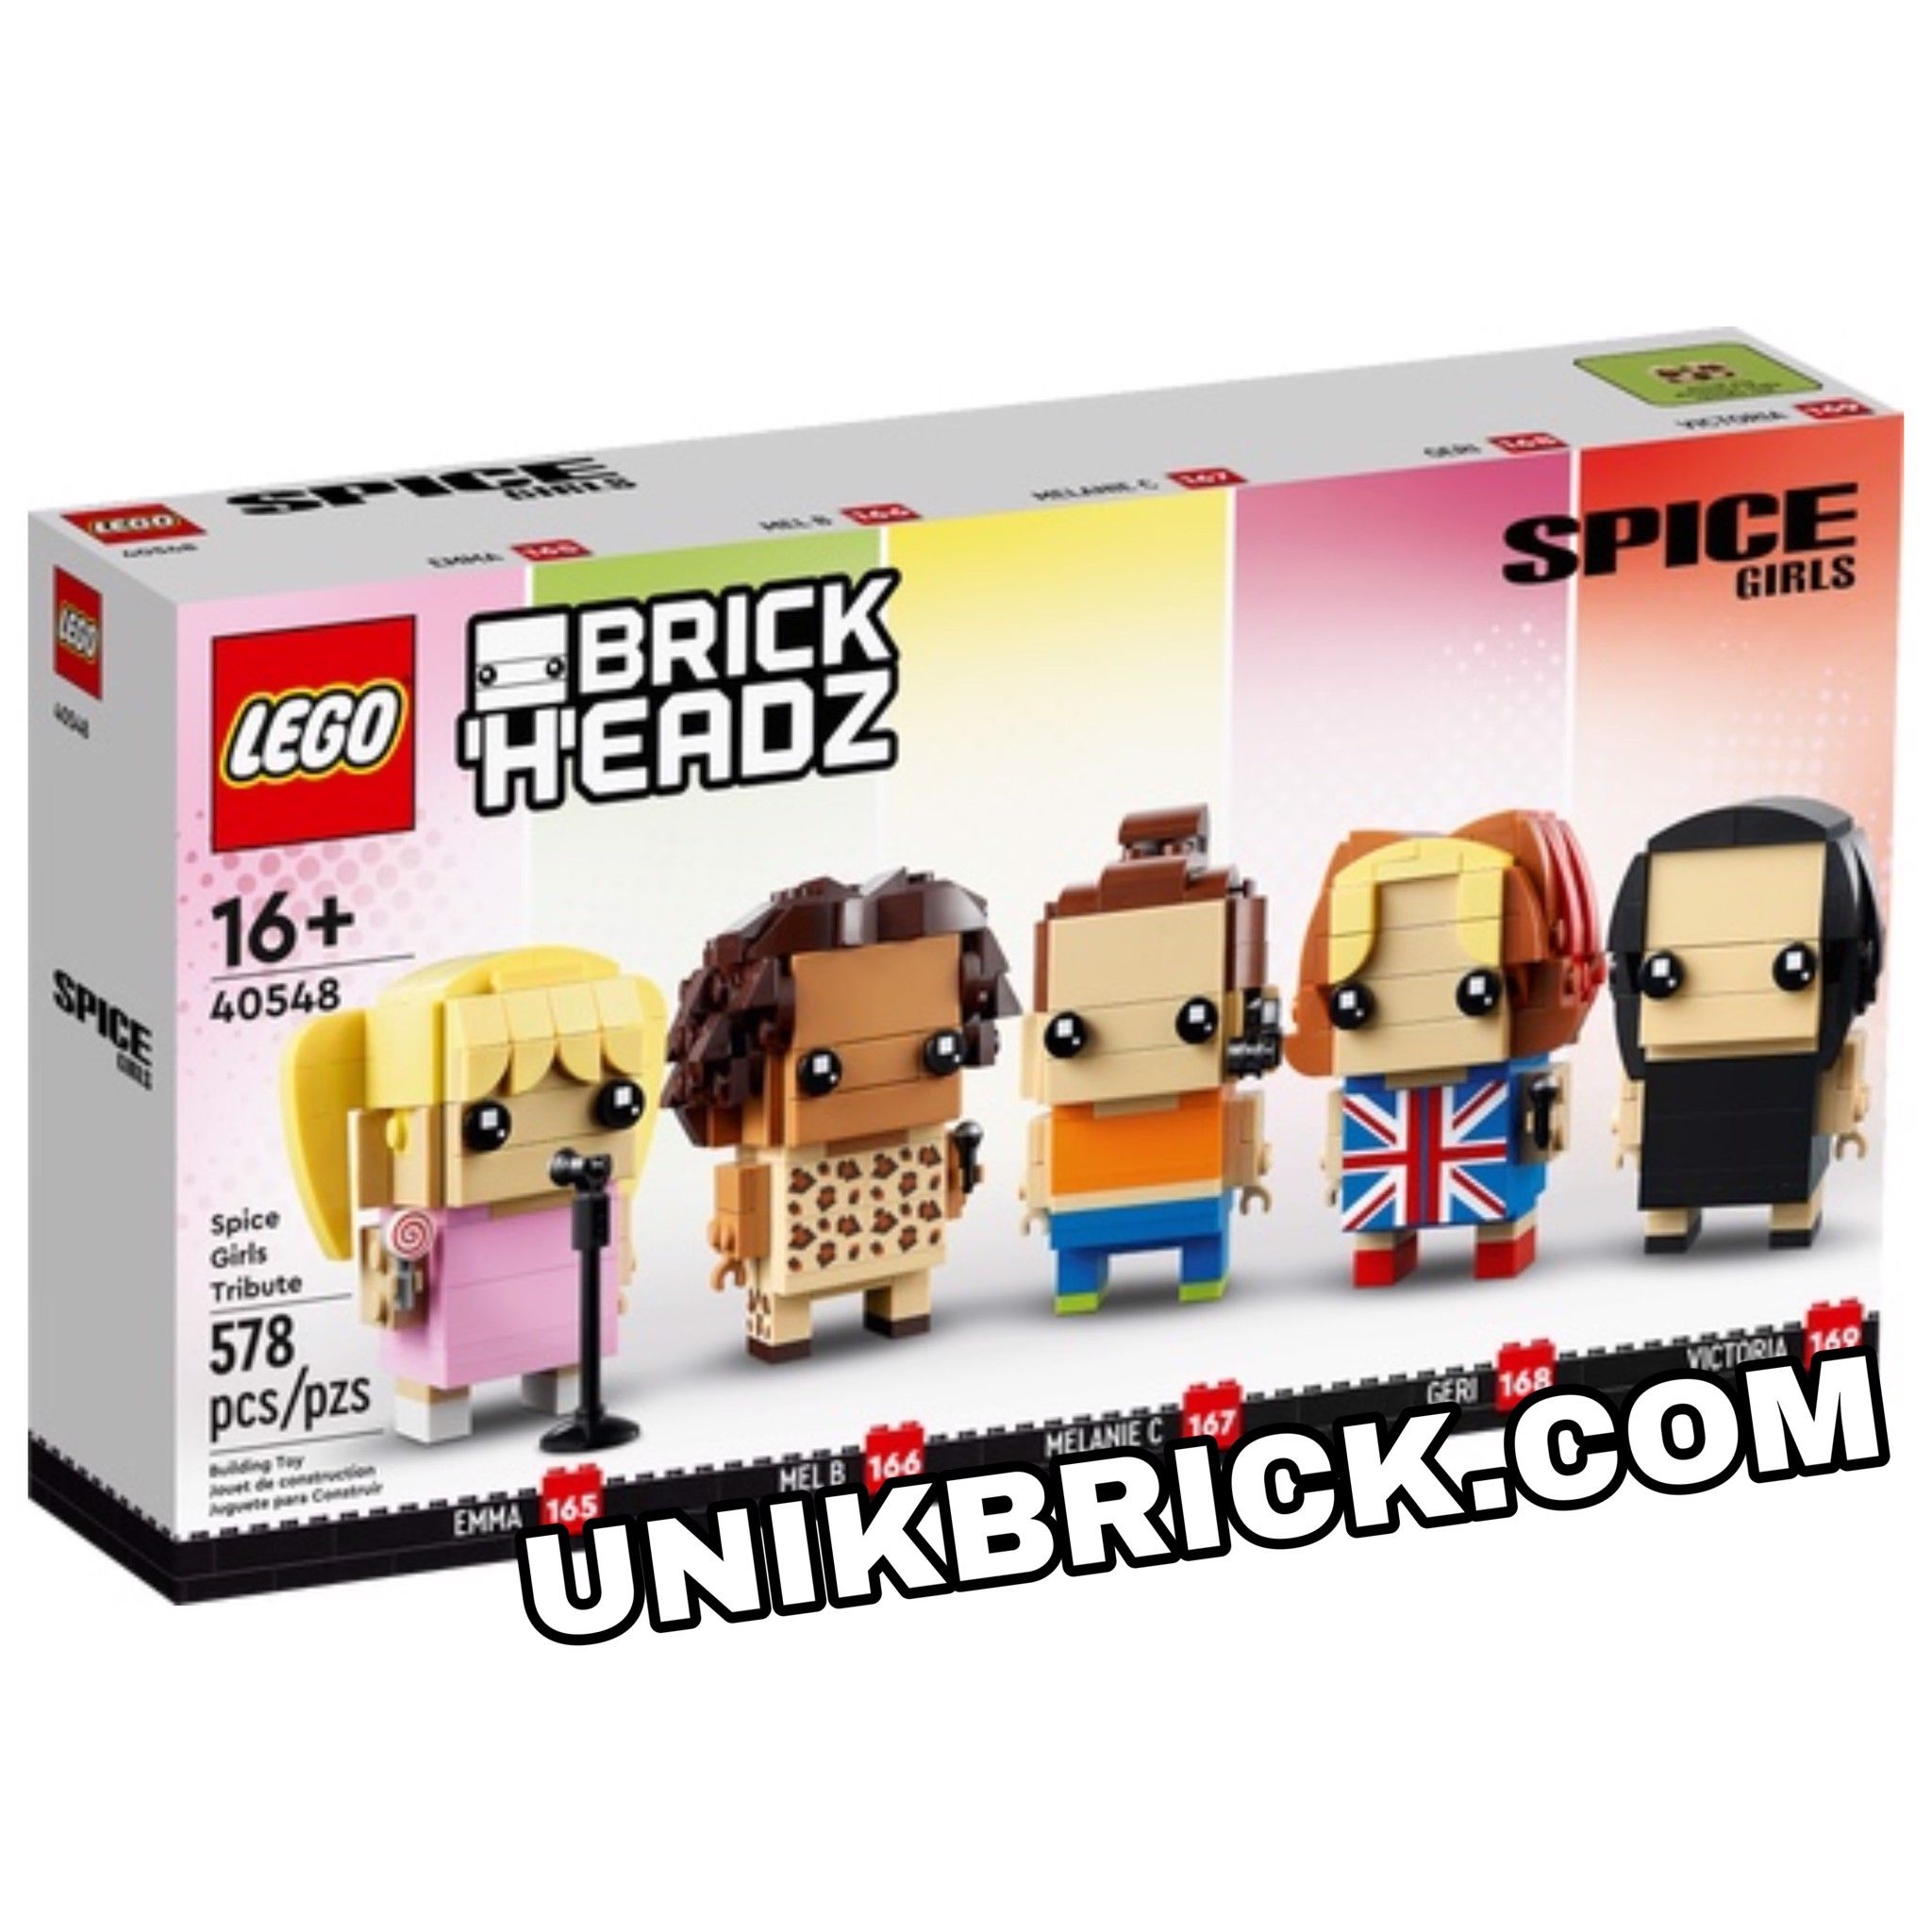 [HÀNG ĐẶT/ ORDER] LEGO Brickheadz 40548 Spice Girls Tribute